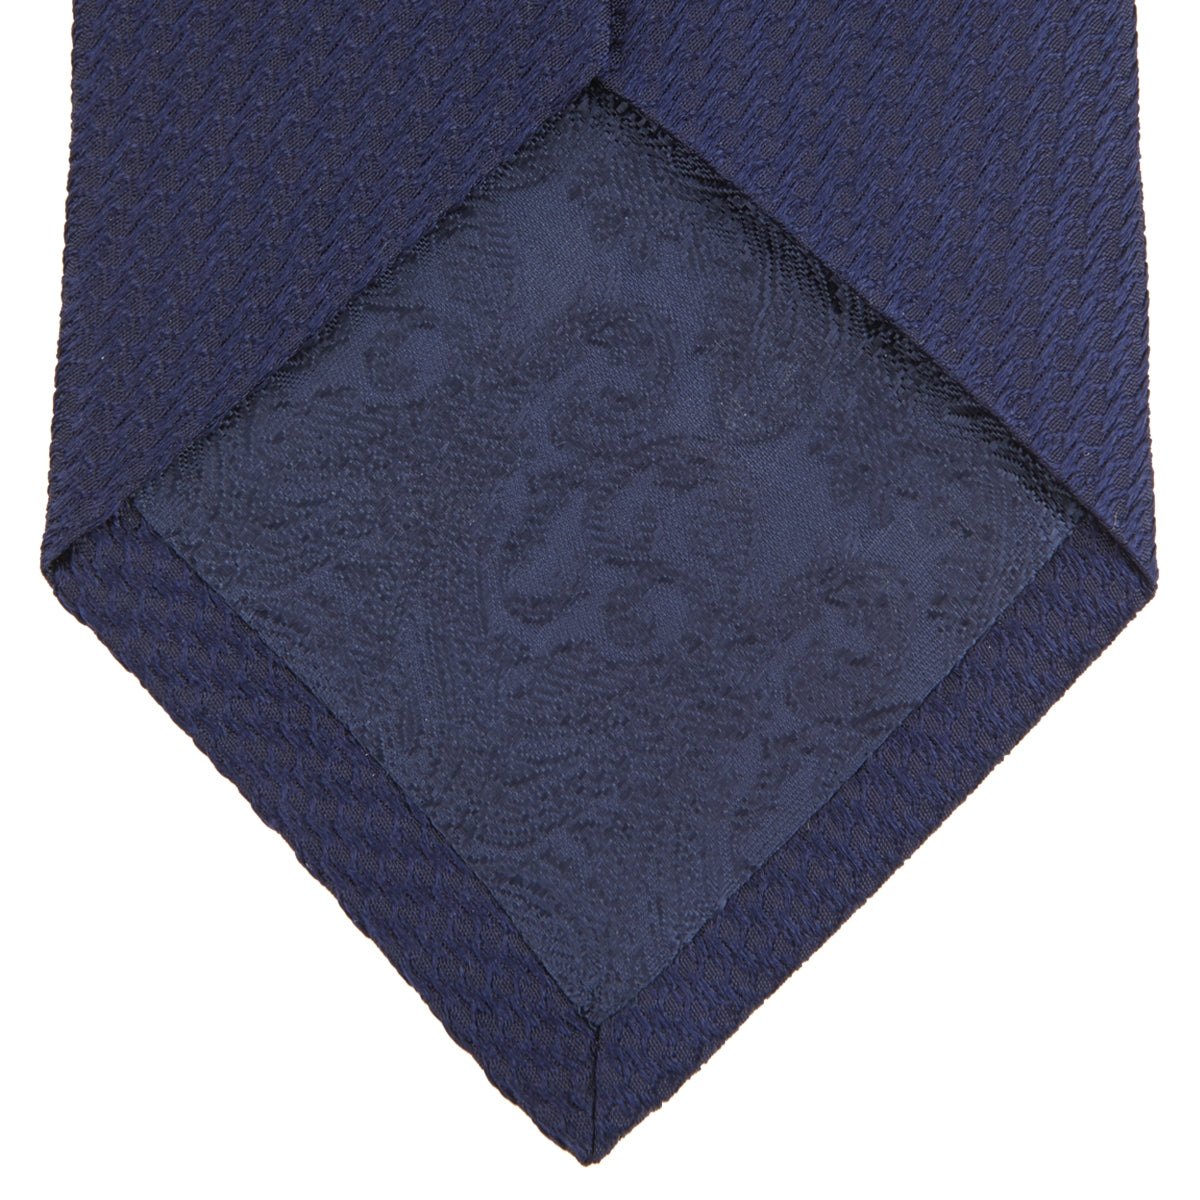 Long Navy Lace Silk Tie